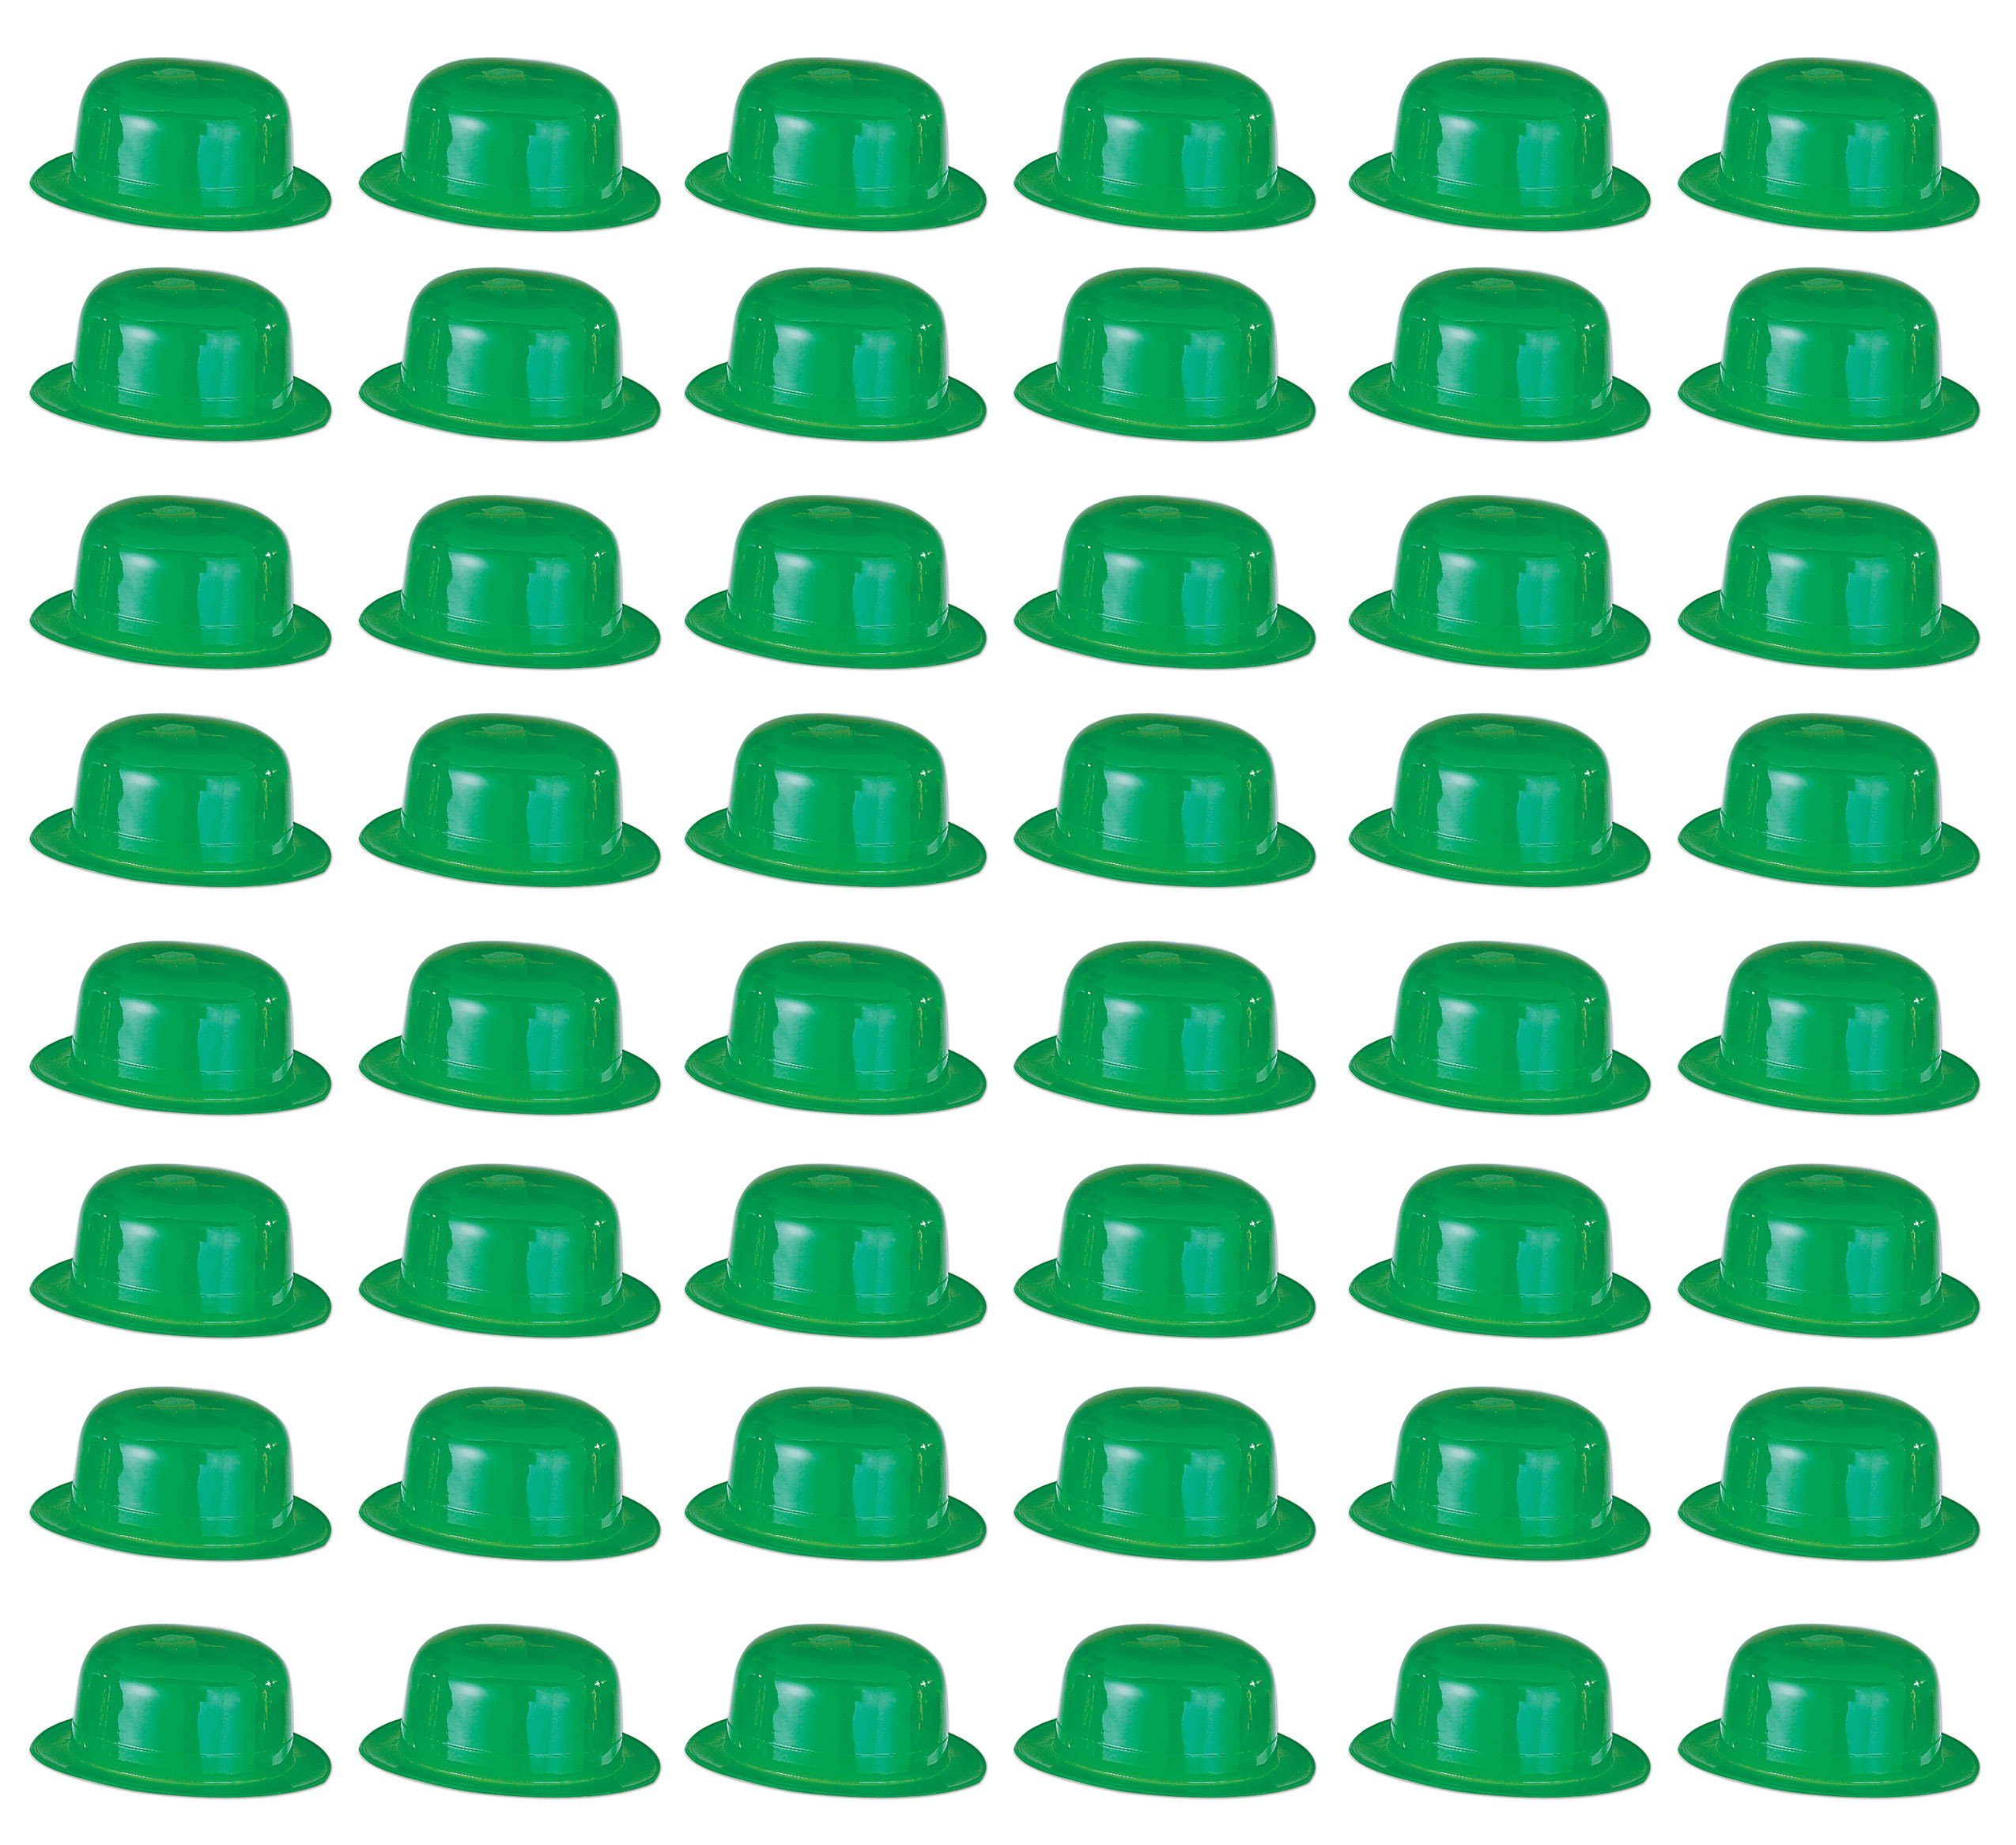 Beistle 33978 48-Pack Plastic Derbies Party Hat, Green